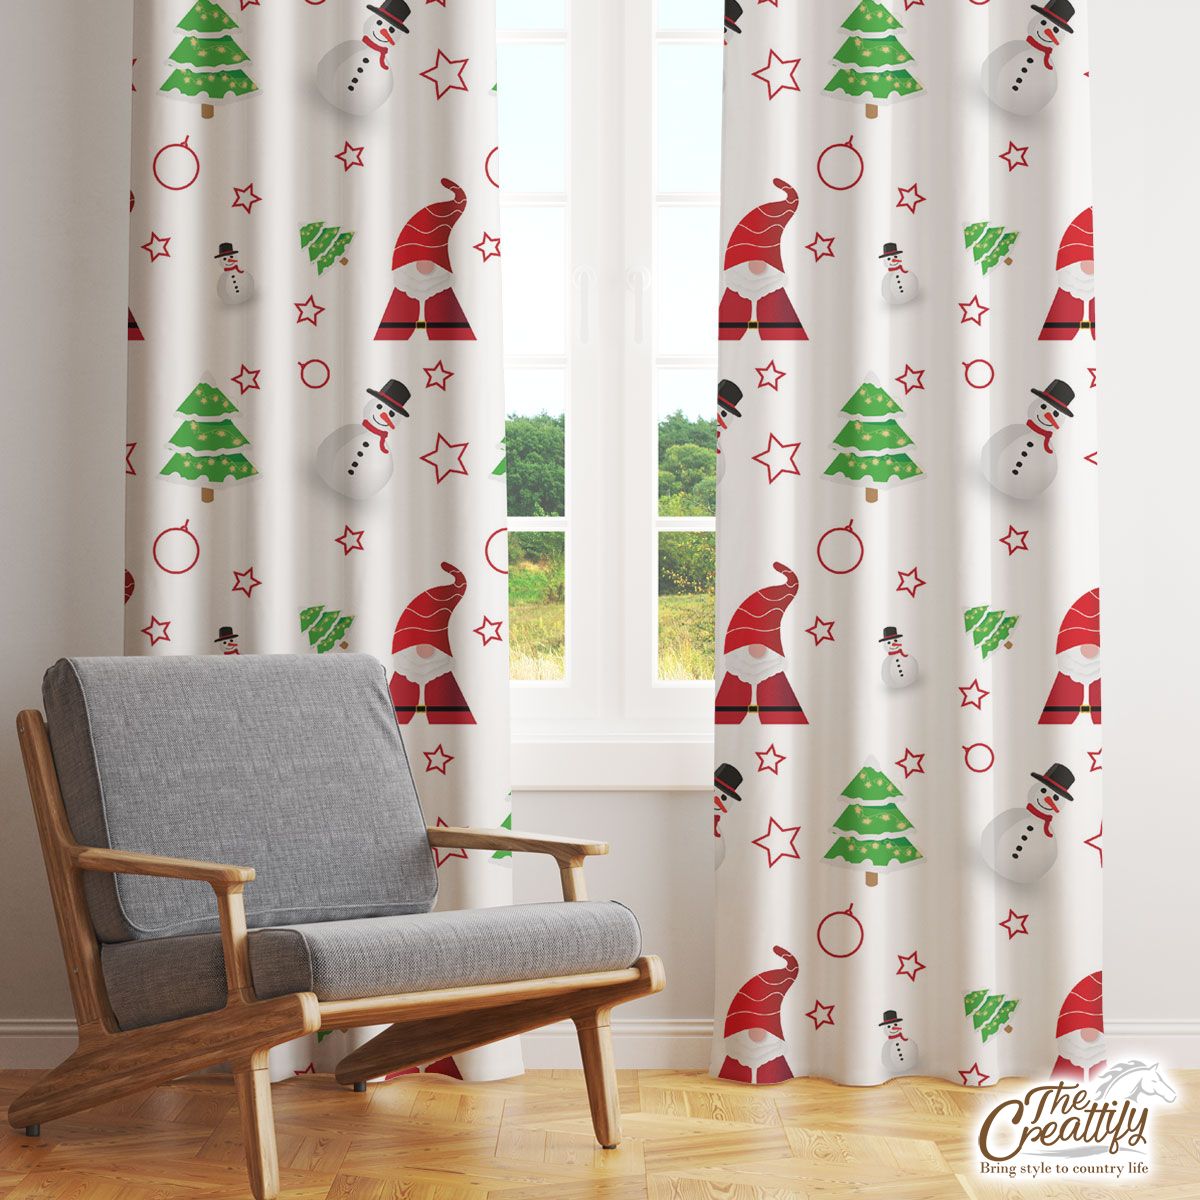 Santa Claus, Snowman Clipart And Pine Tree Silhouette Seamless Pattern Window Curtain